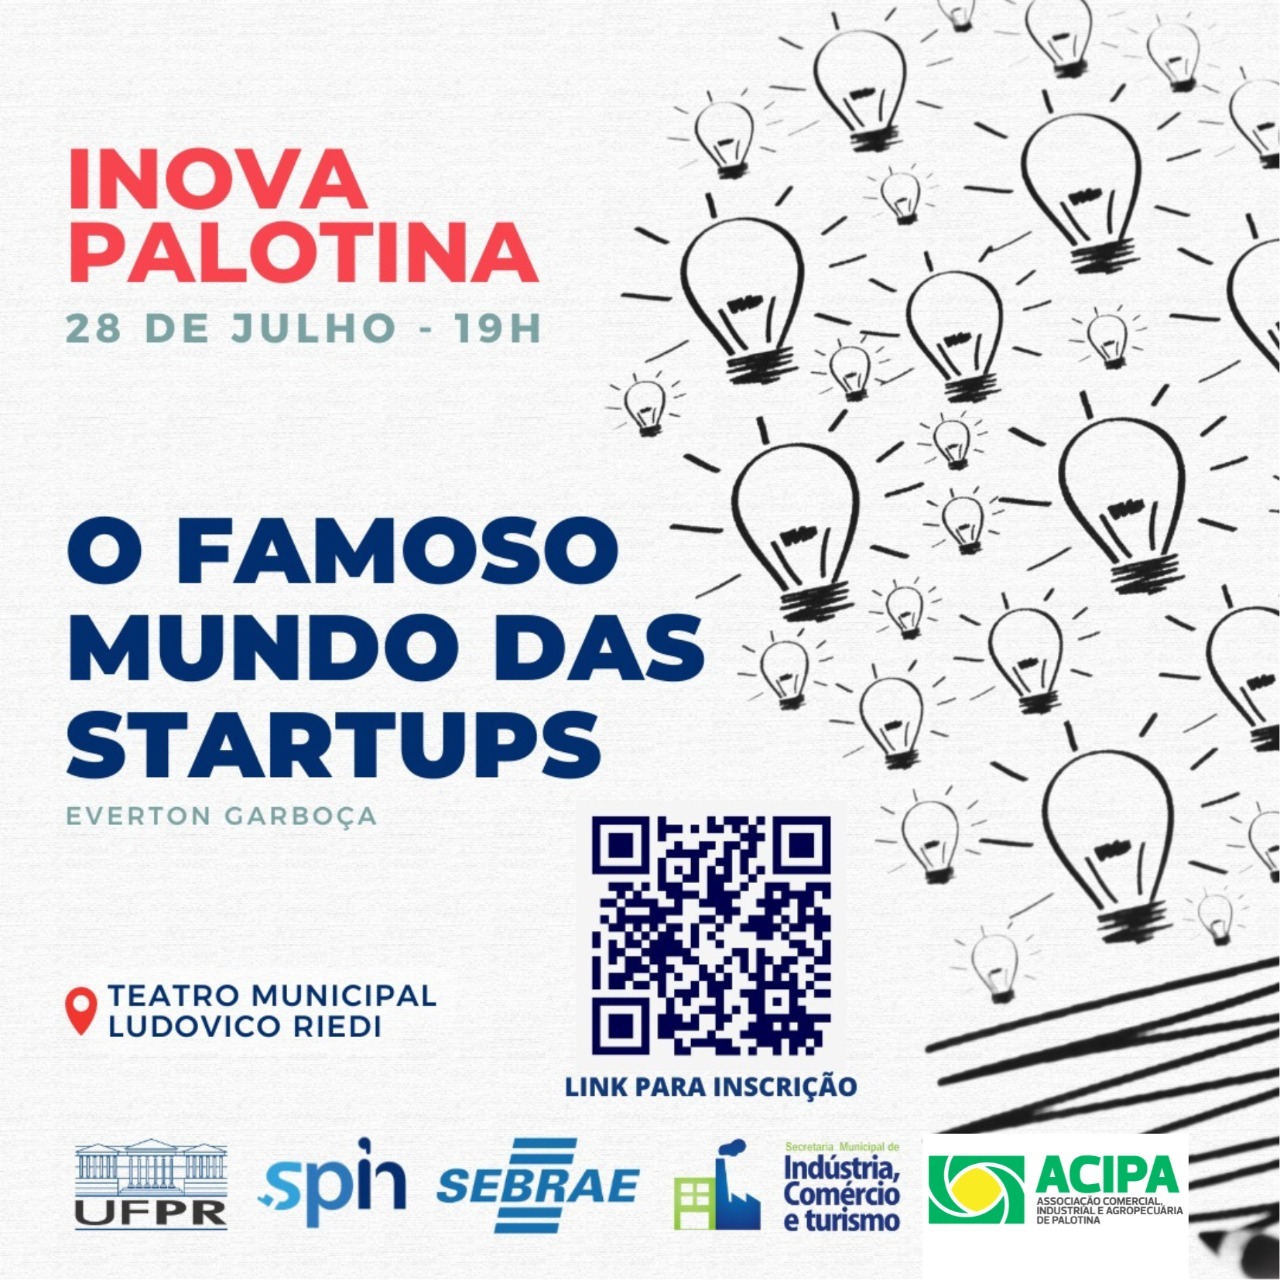 INOVAÇÃO  Palotina promove palestra  “O Famoso Mundo das Startups” 